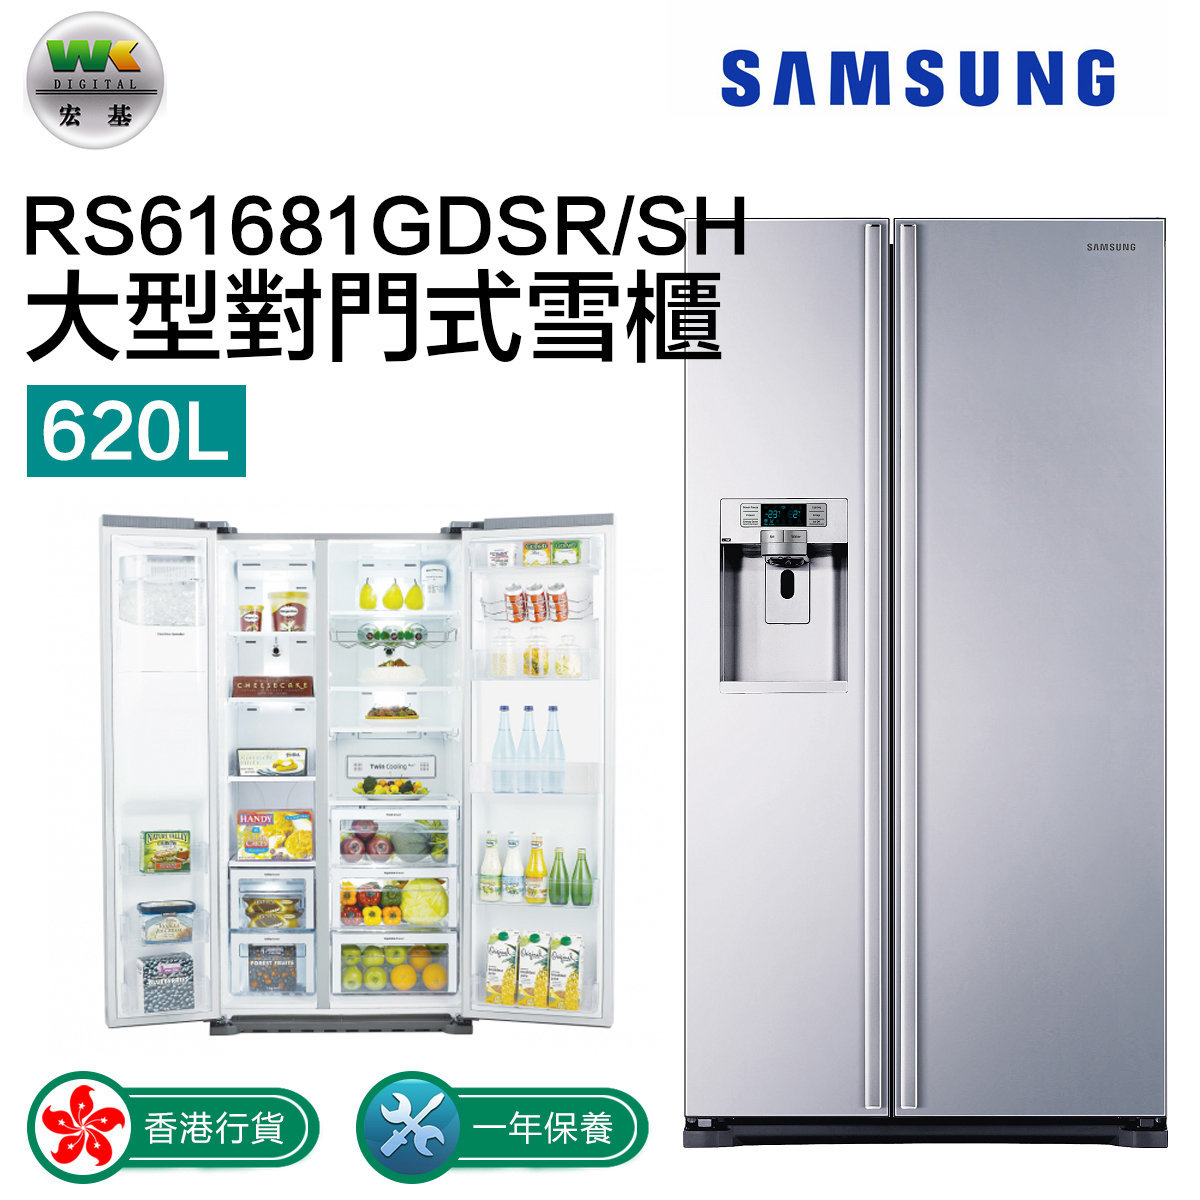 RS61681GDSR/SH Large door type refrigerator 620L